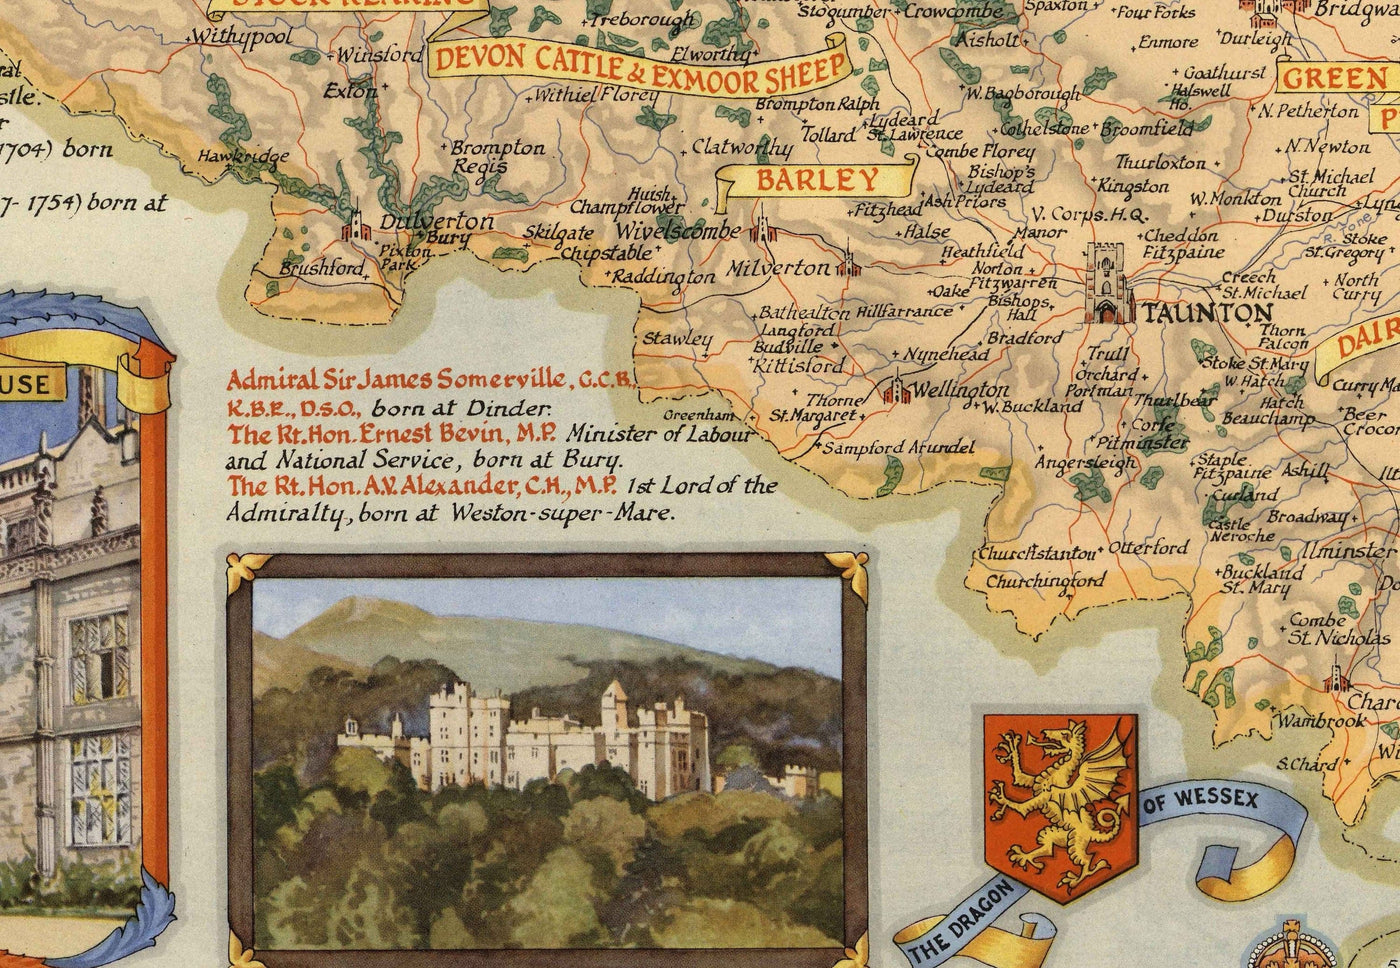 Old Map of Somerset by Ernest Clegg, 1946 - Bath, Wells, Landmarks, World War 2, West Country, Winston Churchill